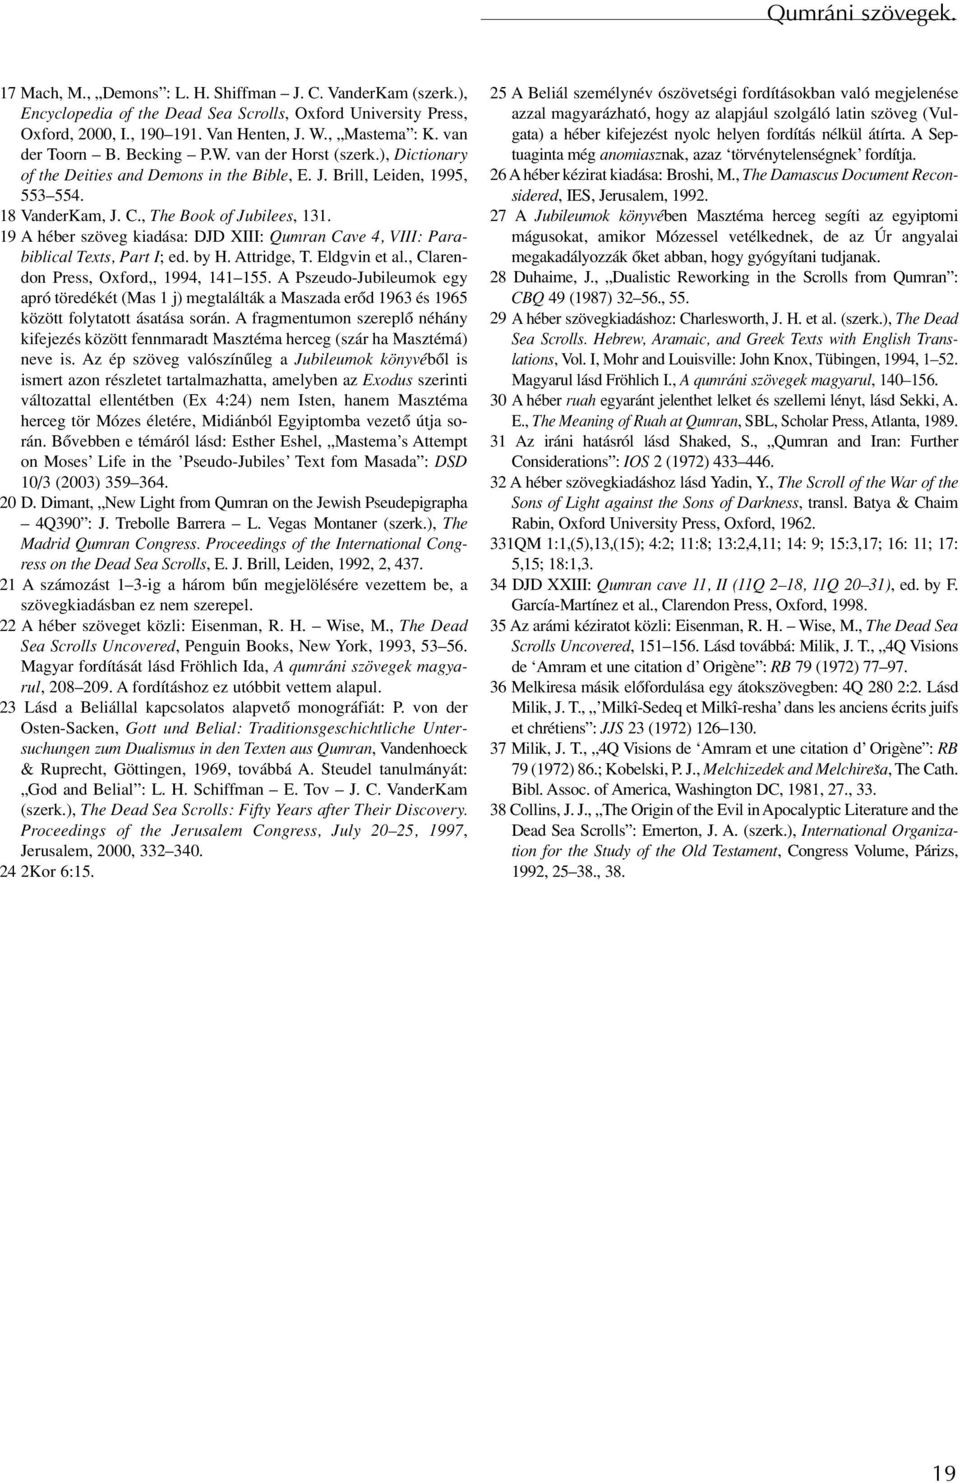 , The Book of Jubilees, 131. 19 A héber szöveg kiadása: DJD XIII: Qumran Cave 4, VIII: Parabiblical Texts, Part I; ed. by H. Attridge, T. Eldgvin et al., Clarendon Press, Oxford,, 1994, 141 155.